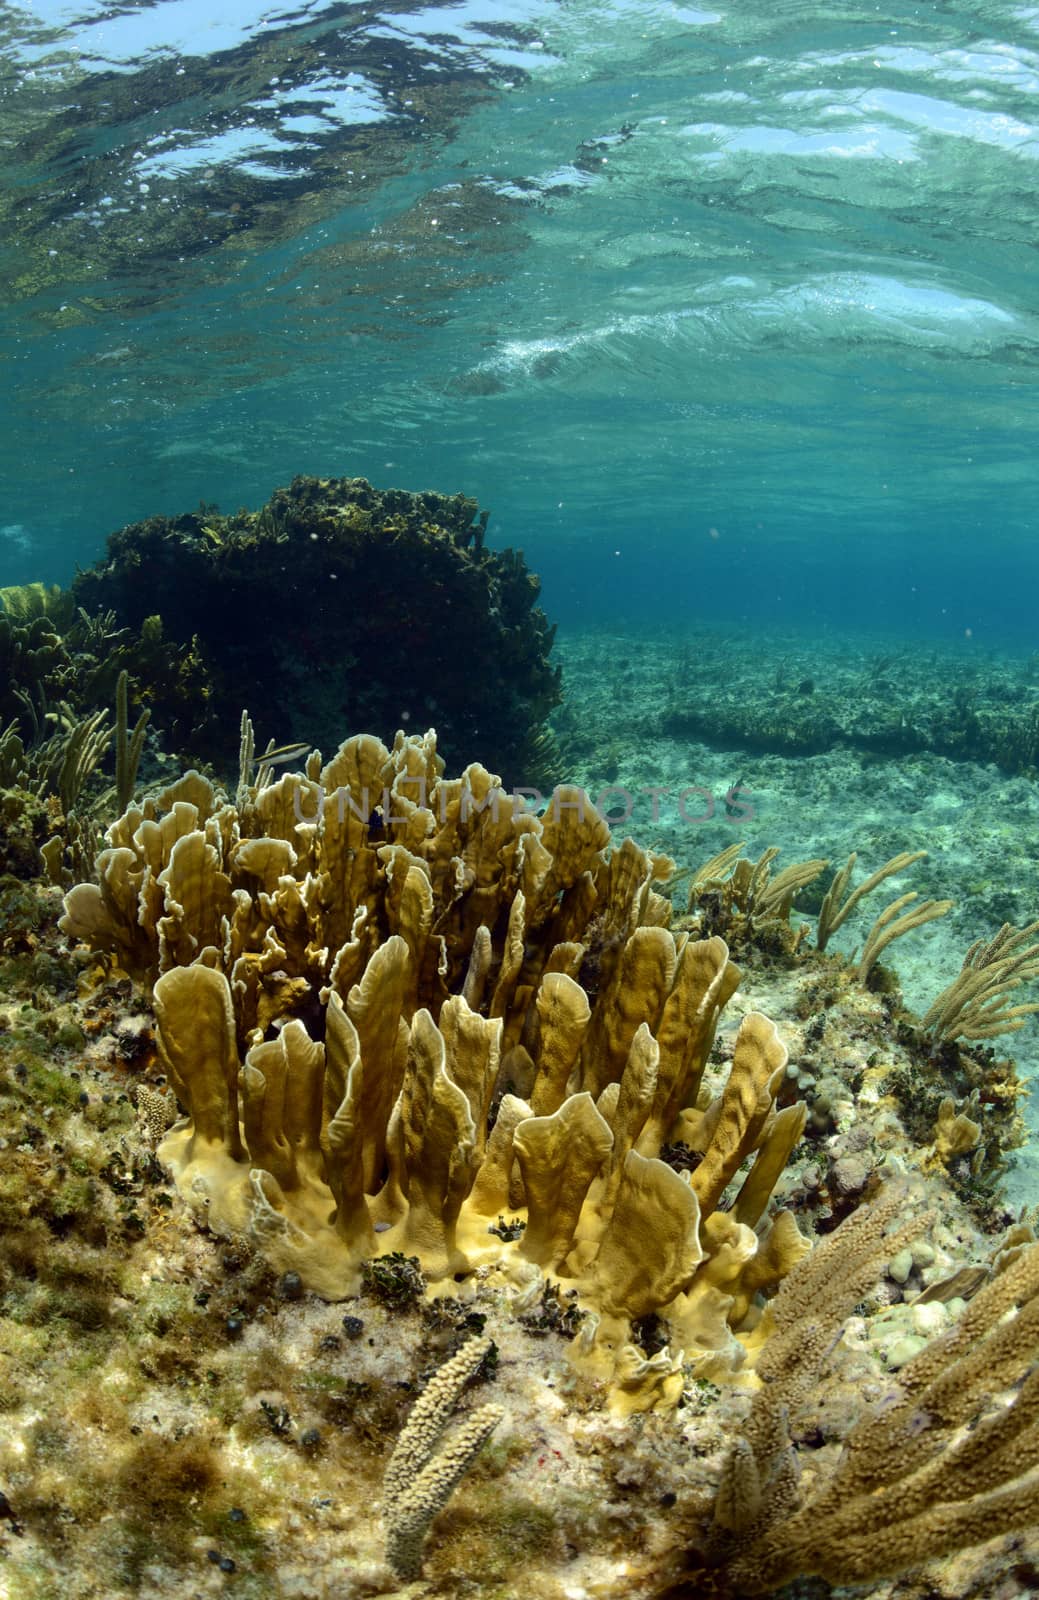 Natural underwater ocean scene in tropical location